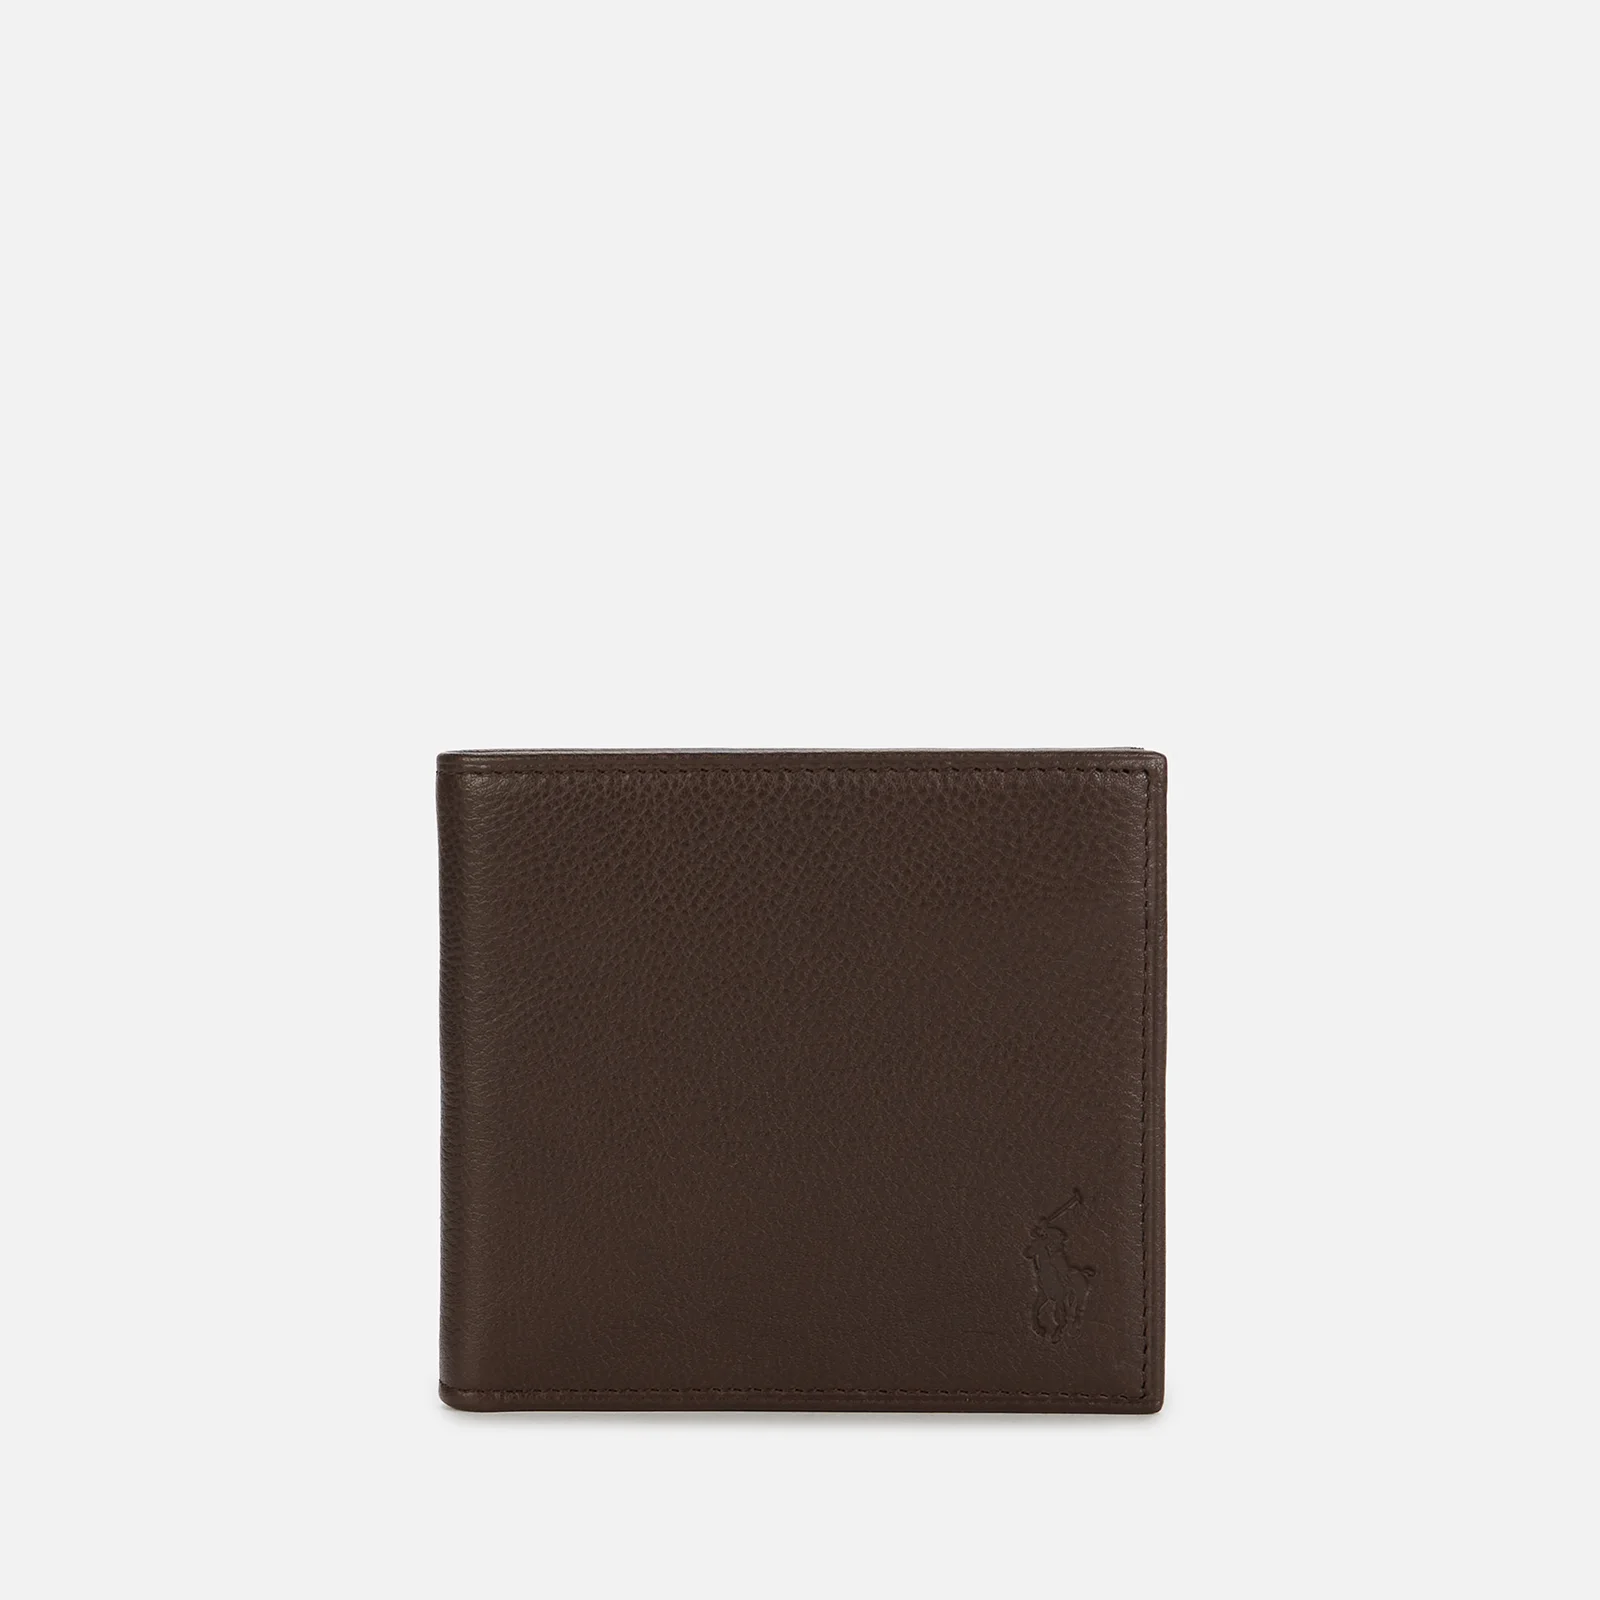 Polo Ralph Lauren Men's Leather Bifold Wallet - Brown Image 1